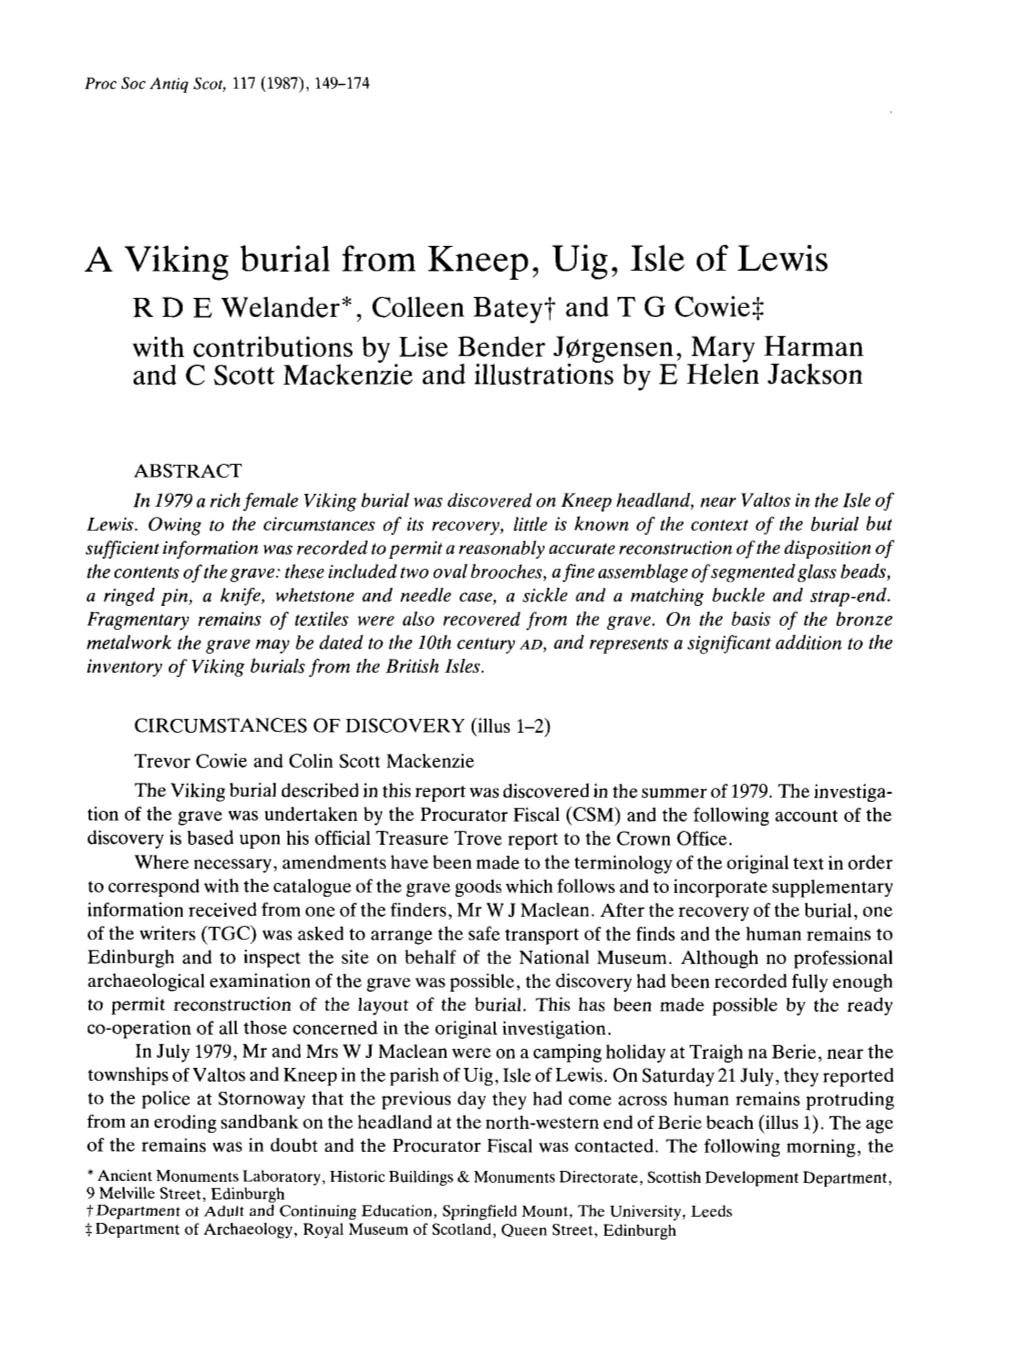 A Viking Burial from Kneep, Uig, Isle of Lewis